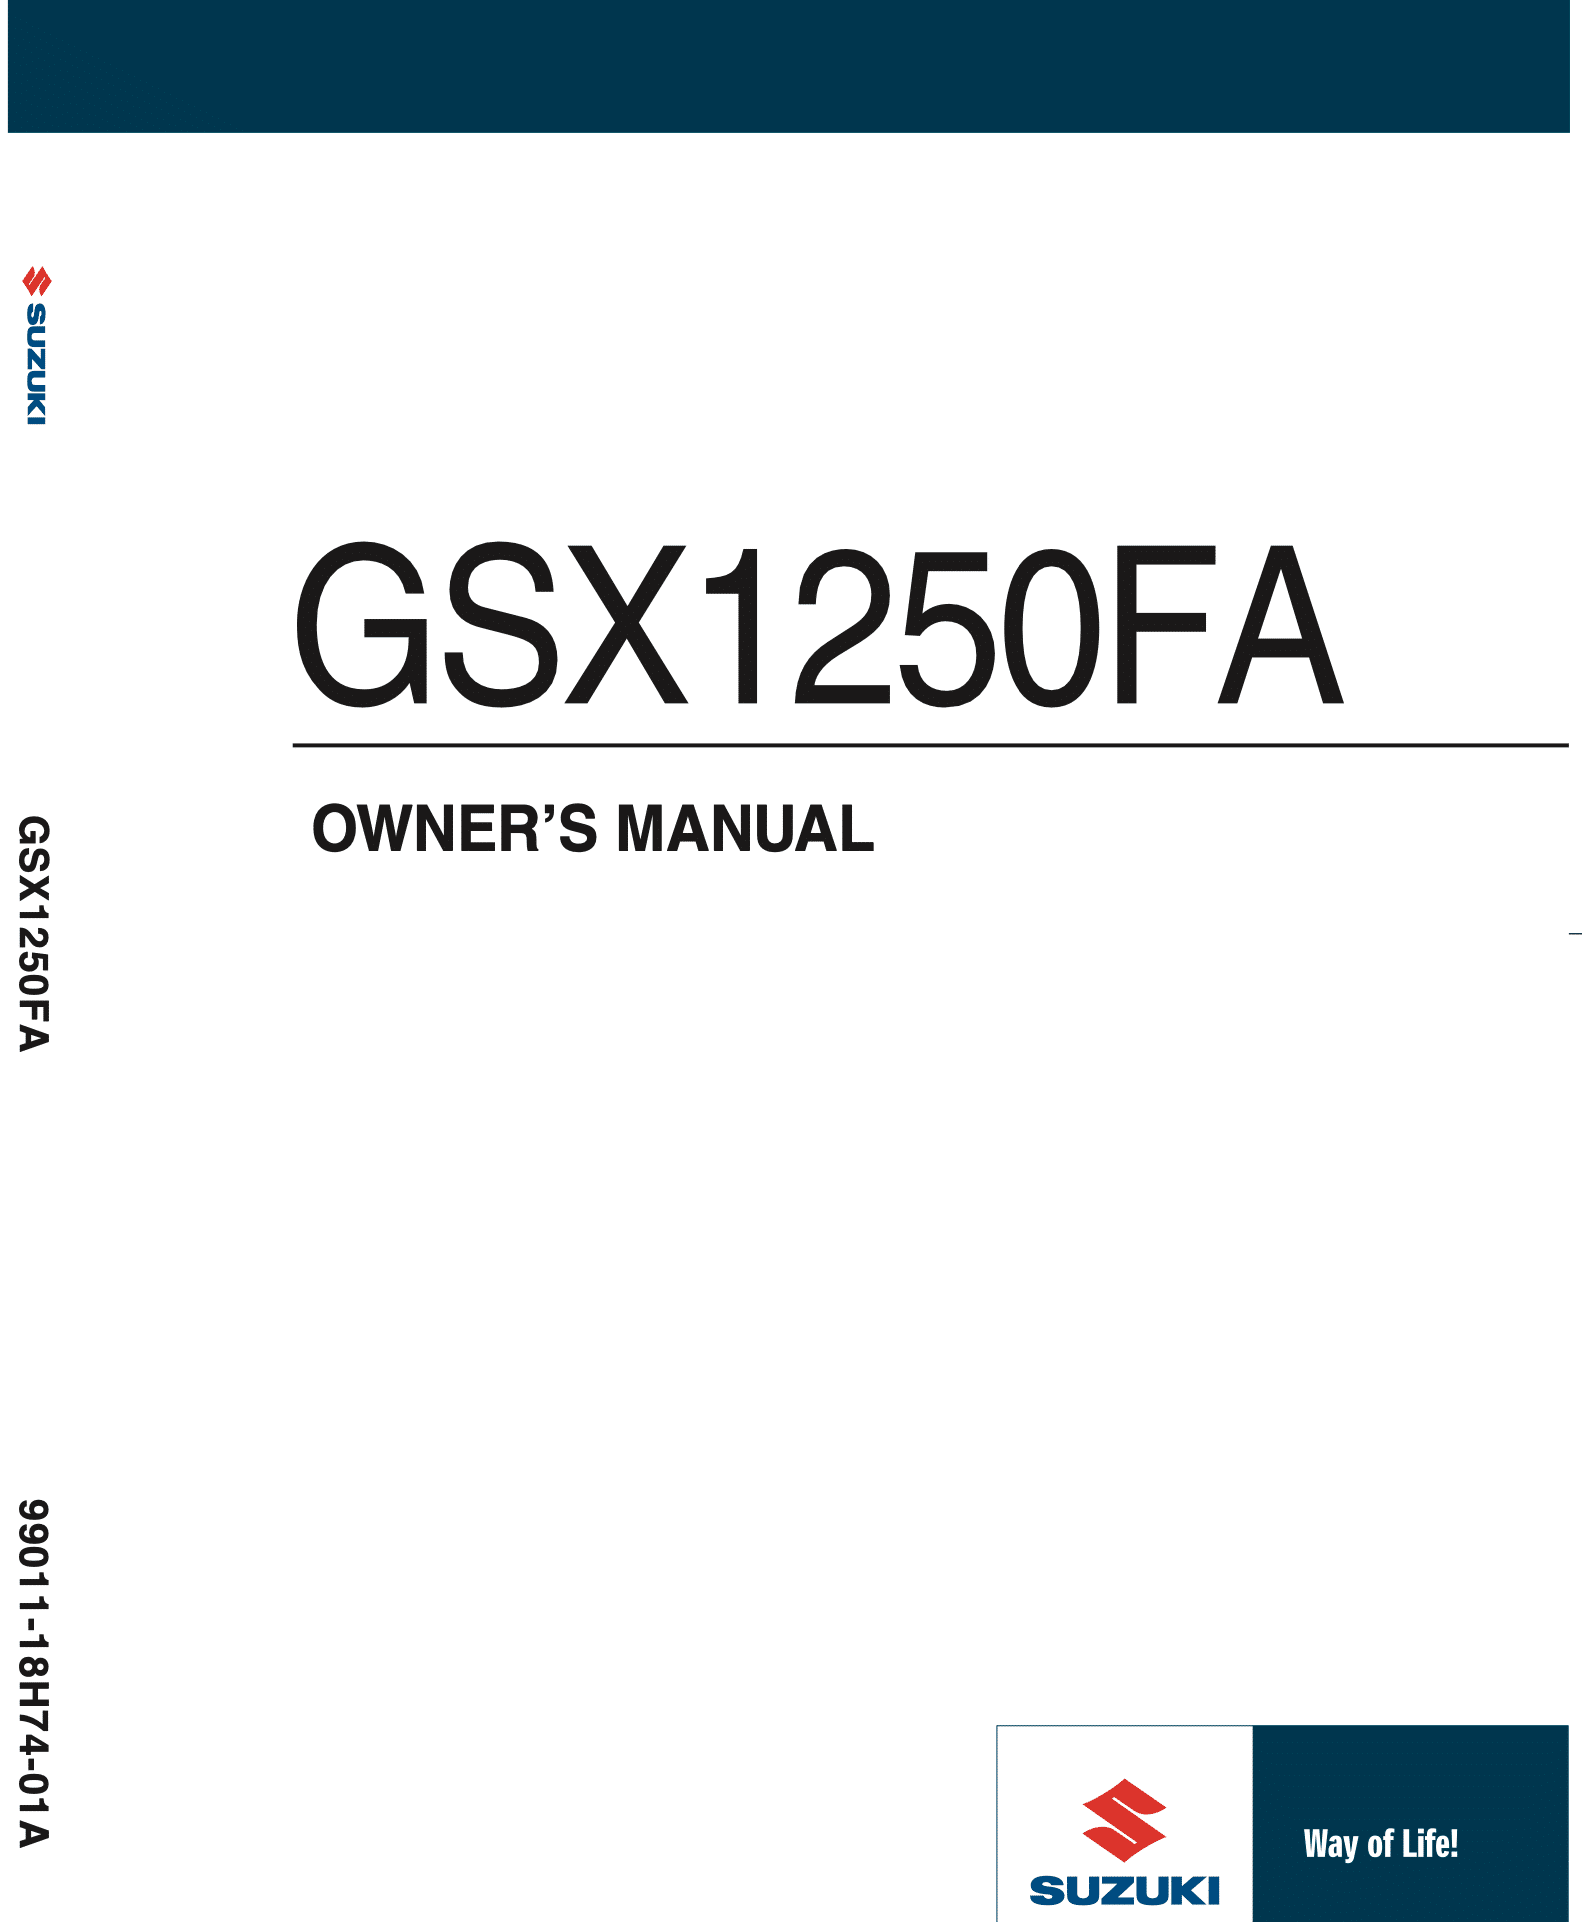 Suzuki GSX1250FA maintenance schedule from manual 1